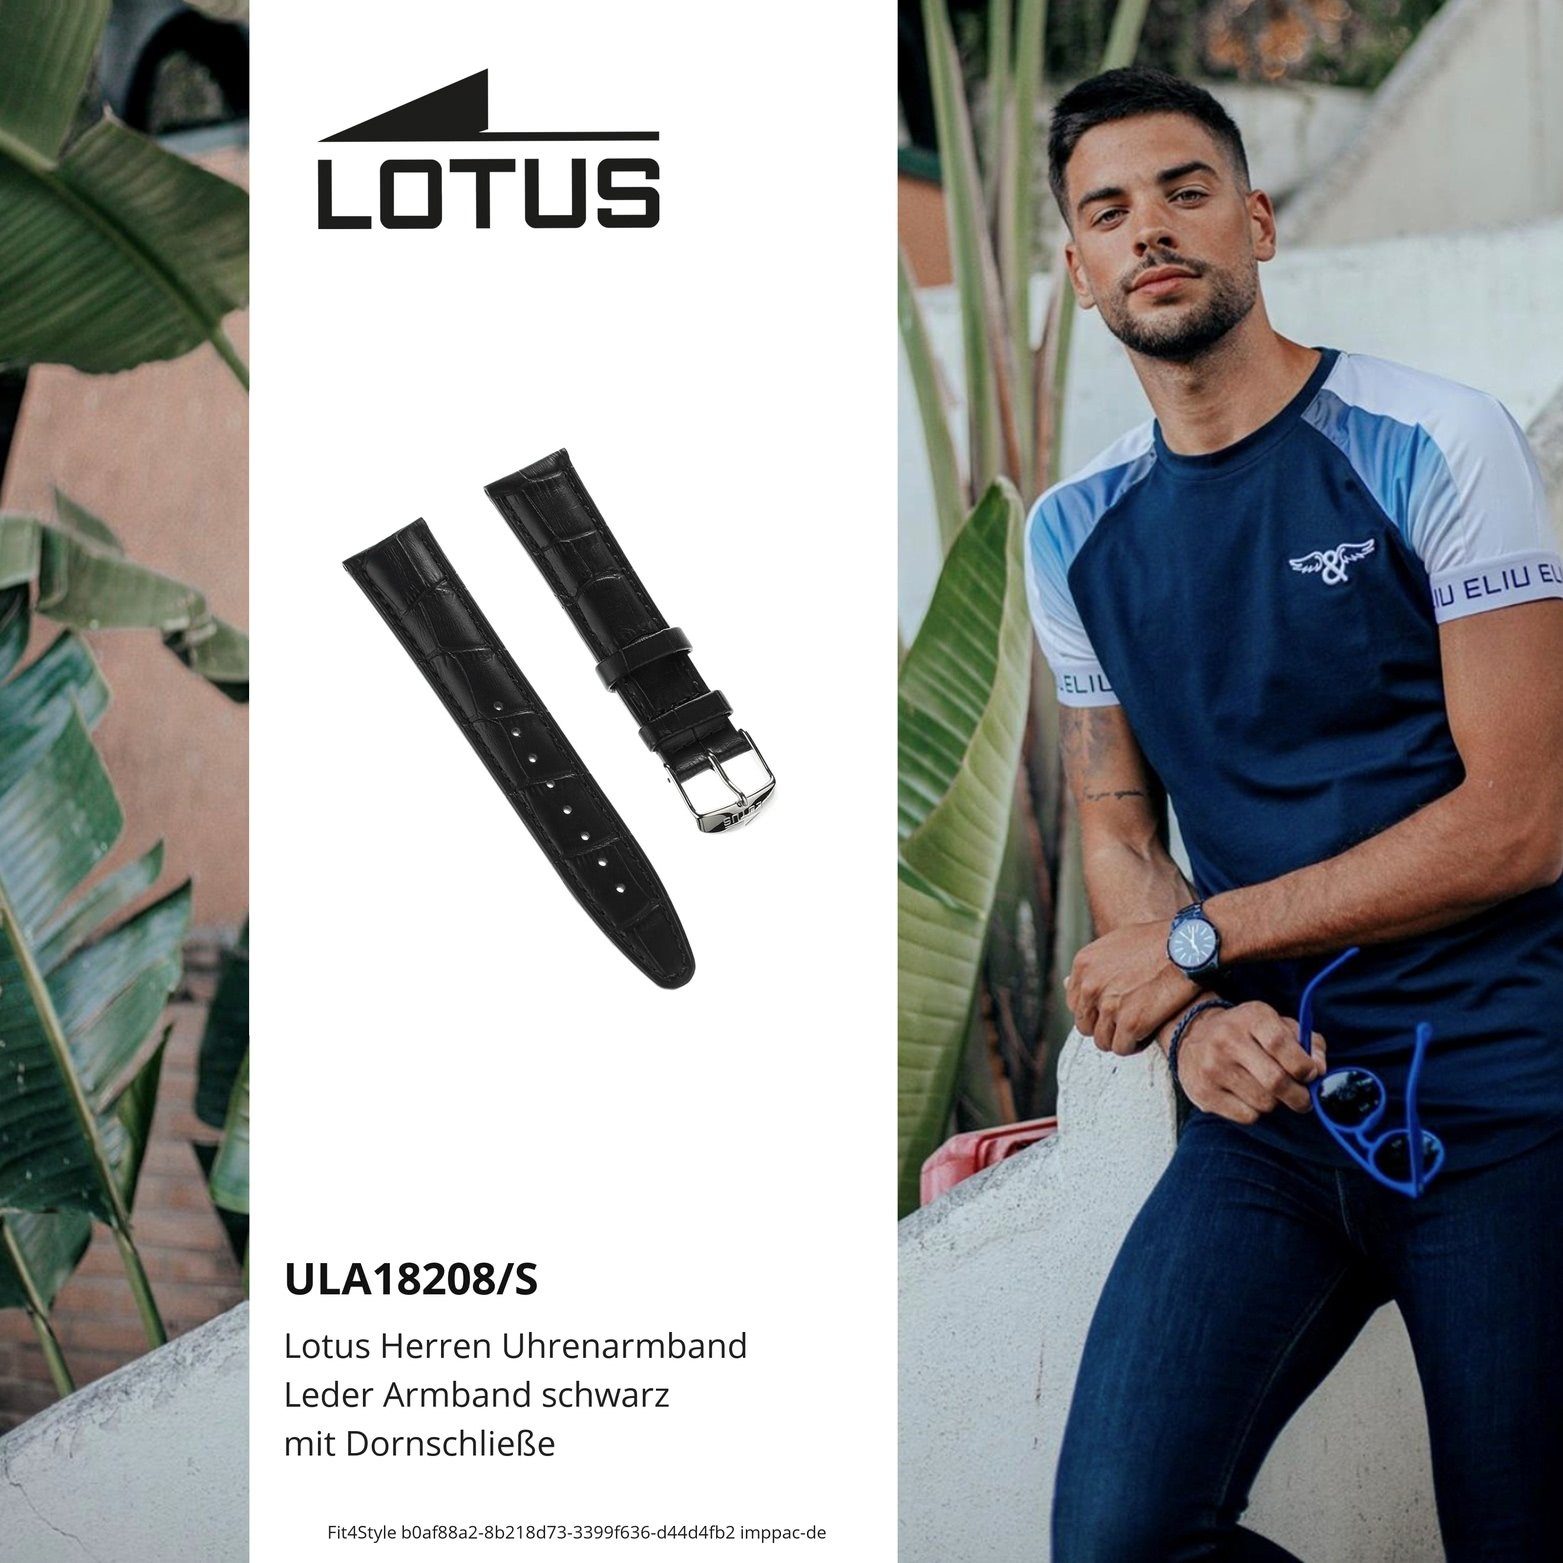 Fashion-Style Herren Herrenuhr Uhrenarmband Lotus mit Lederarmband, Uhrenarmband 21mm, Lotus